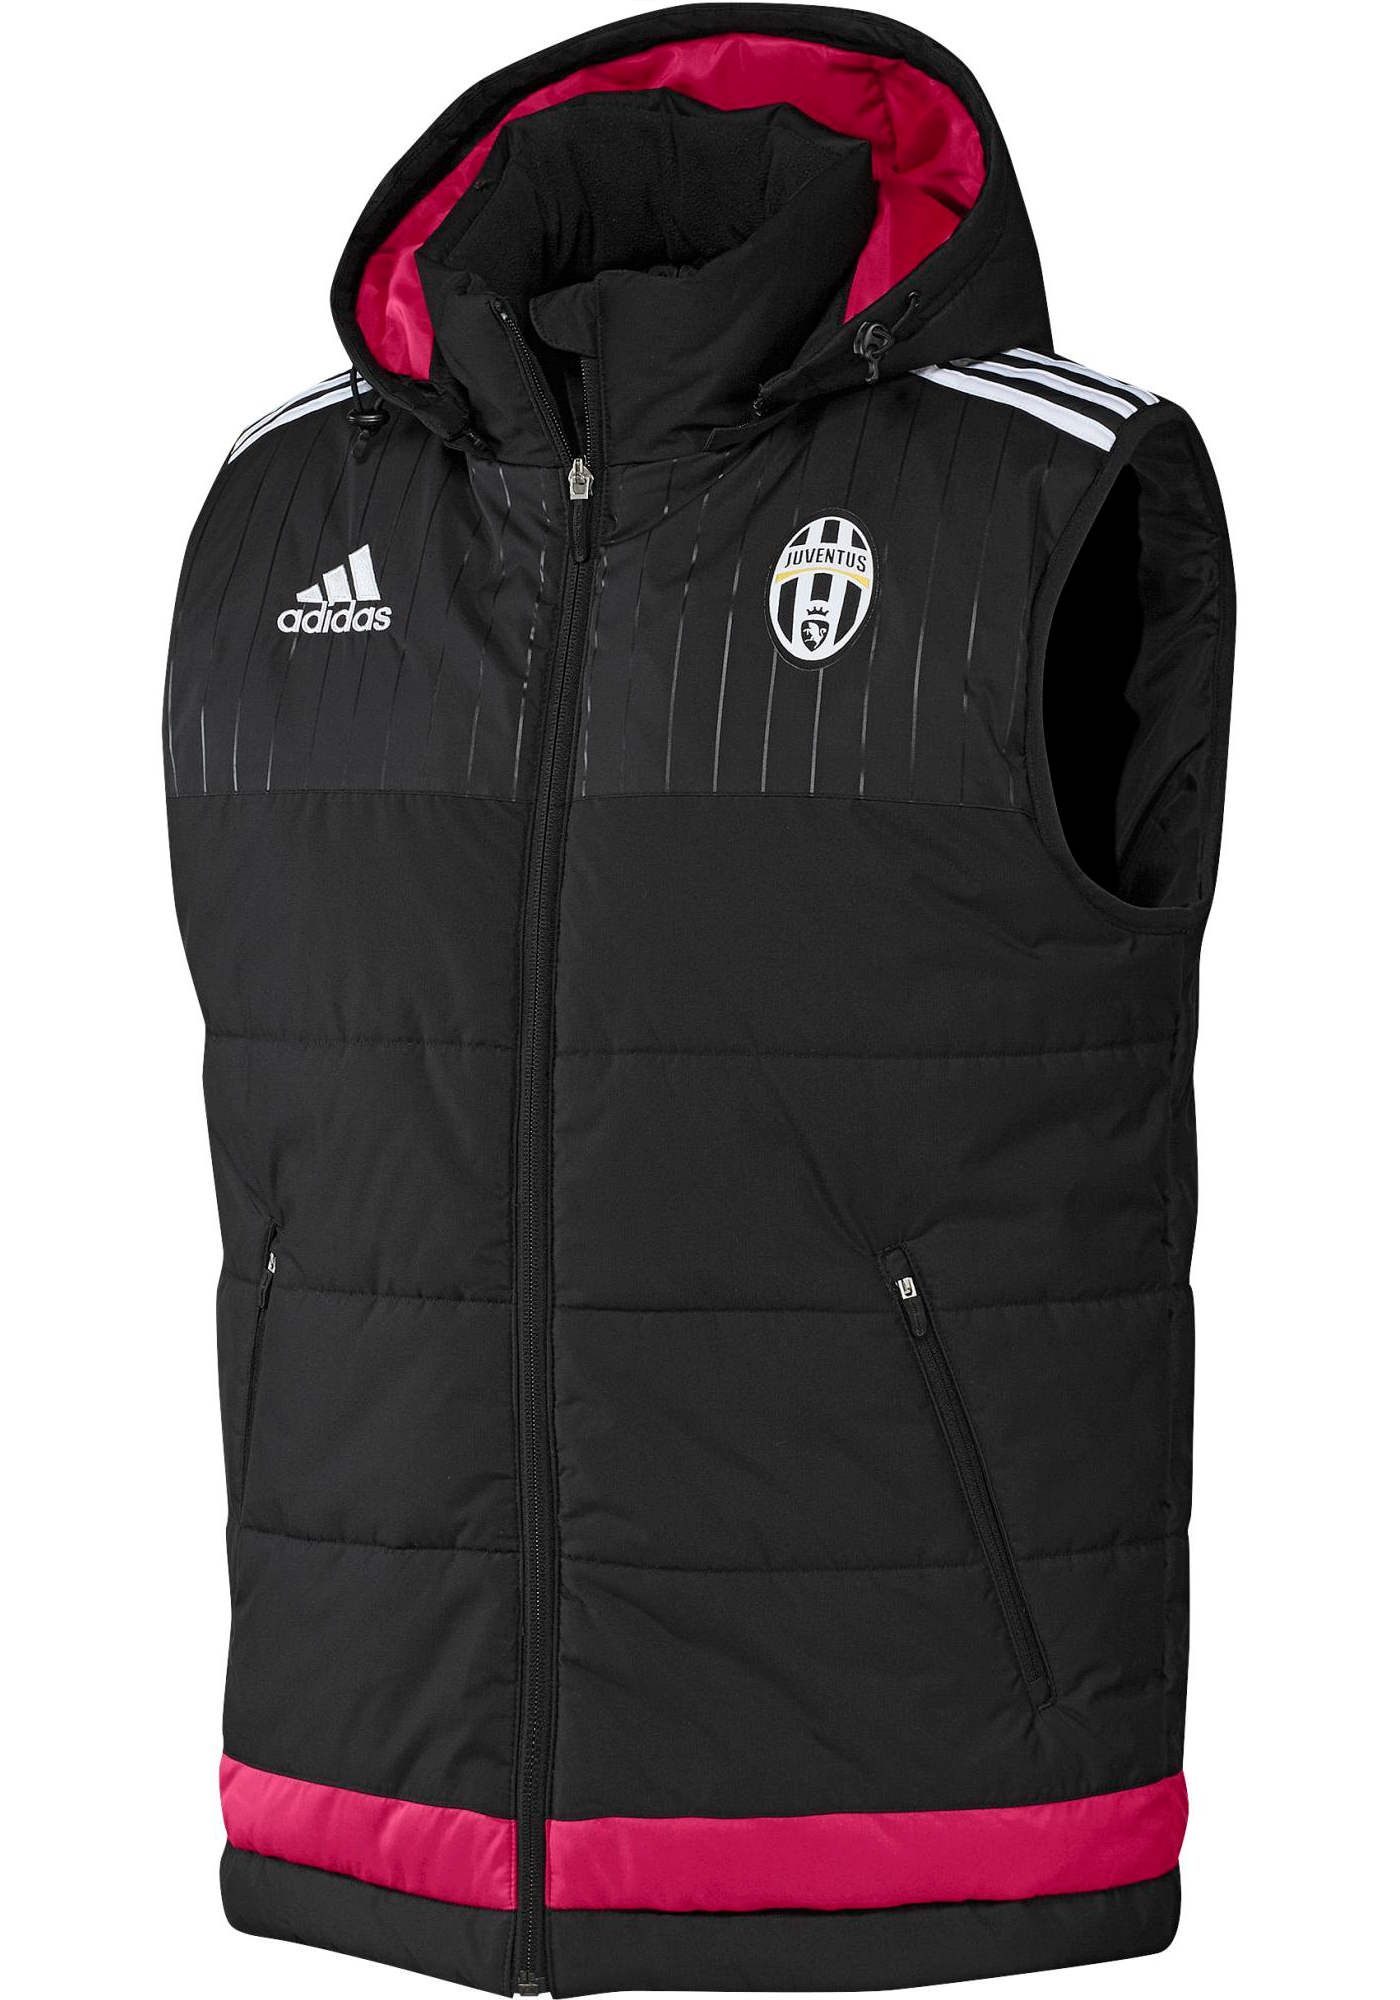 nike air force one de prix - Juventus Turin Adidas Doudoune Down Jacket Noir Gilet Sans Manches ...